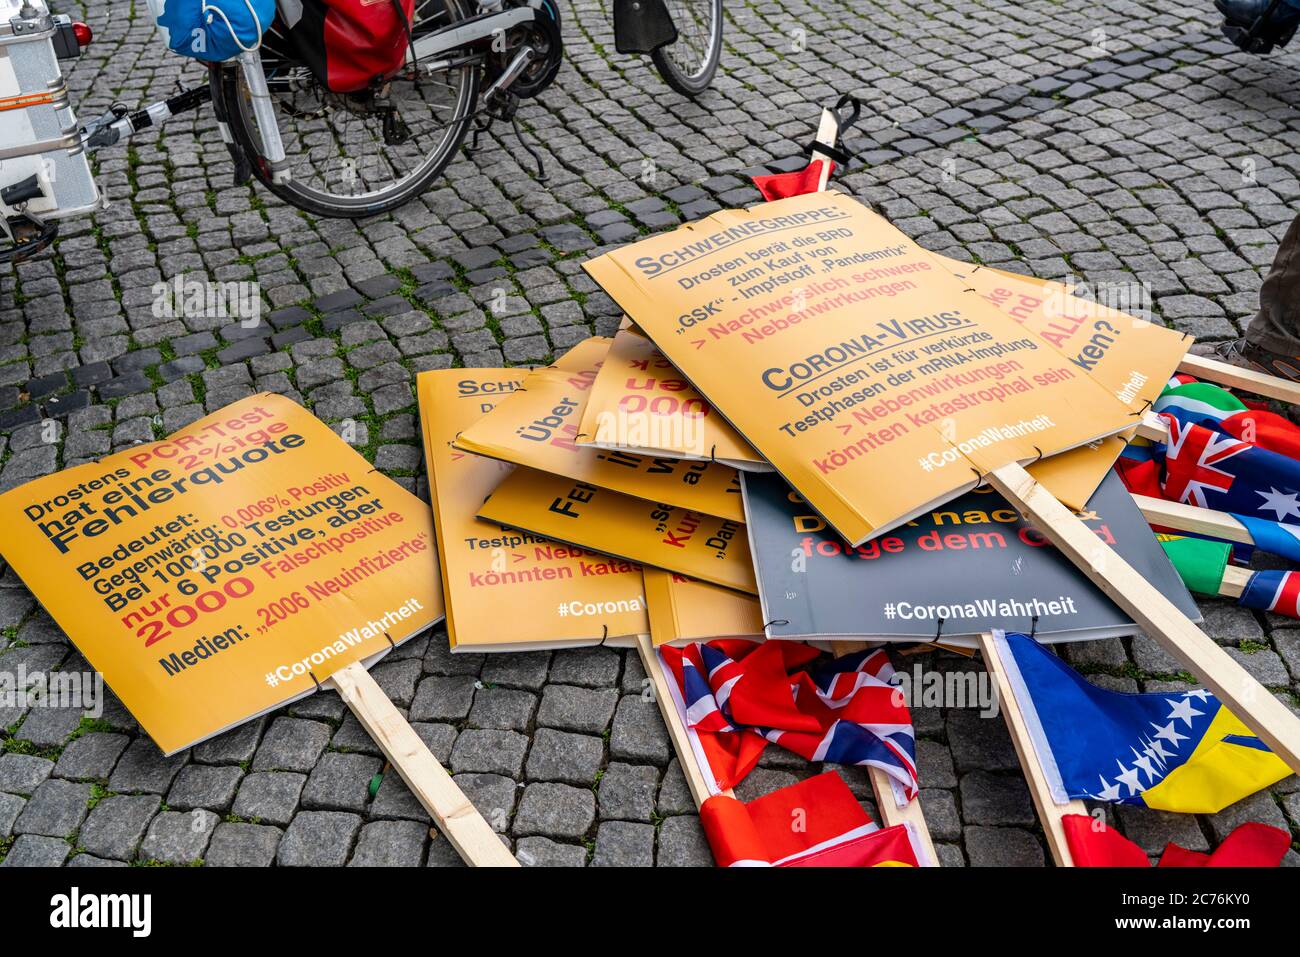 Demonstration against corona measures, compulsory masks, etc., in Düsseldorf Germany, Stock Photo